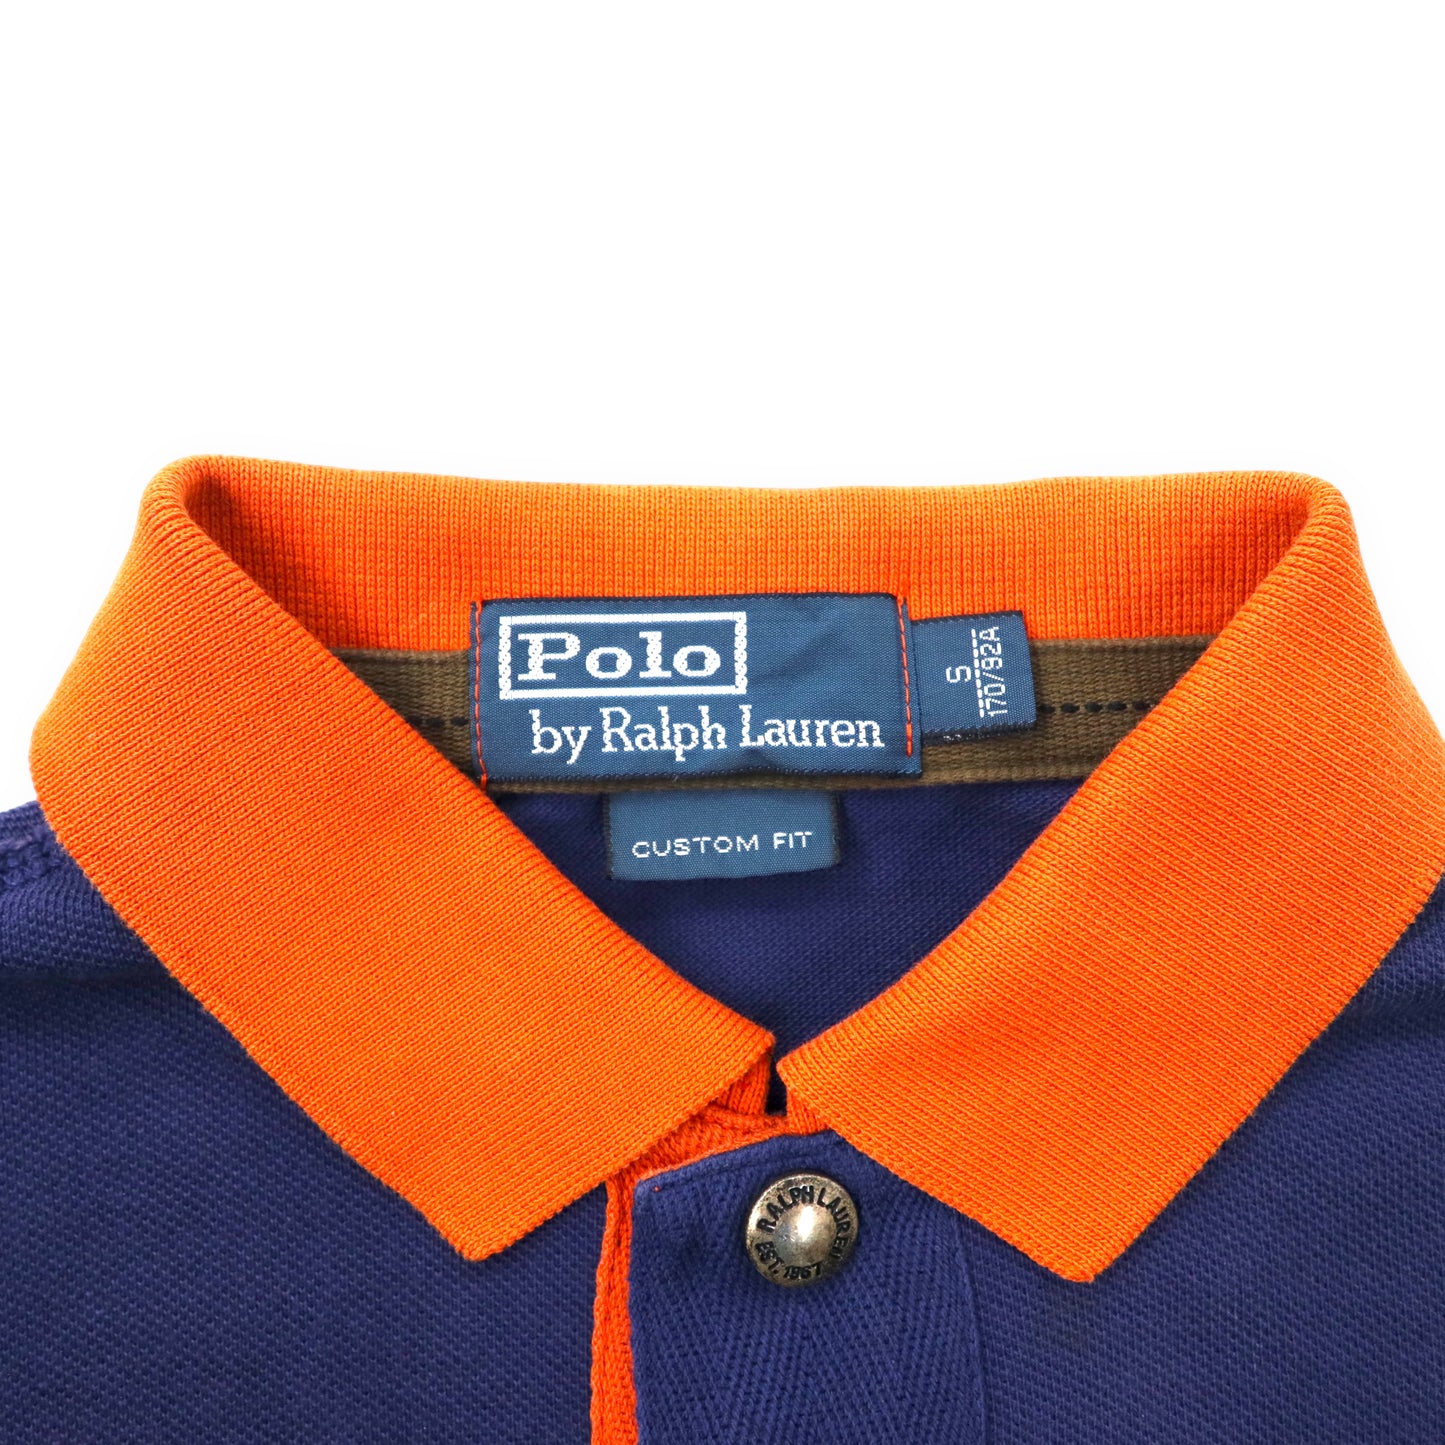 Polo by Ralph Lauren ビッグポニー ポロシャツ 170 ネイビー コットン ハーフスナップボタン